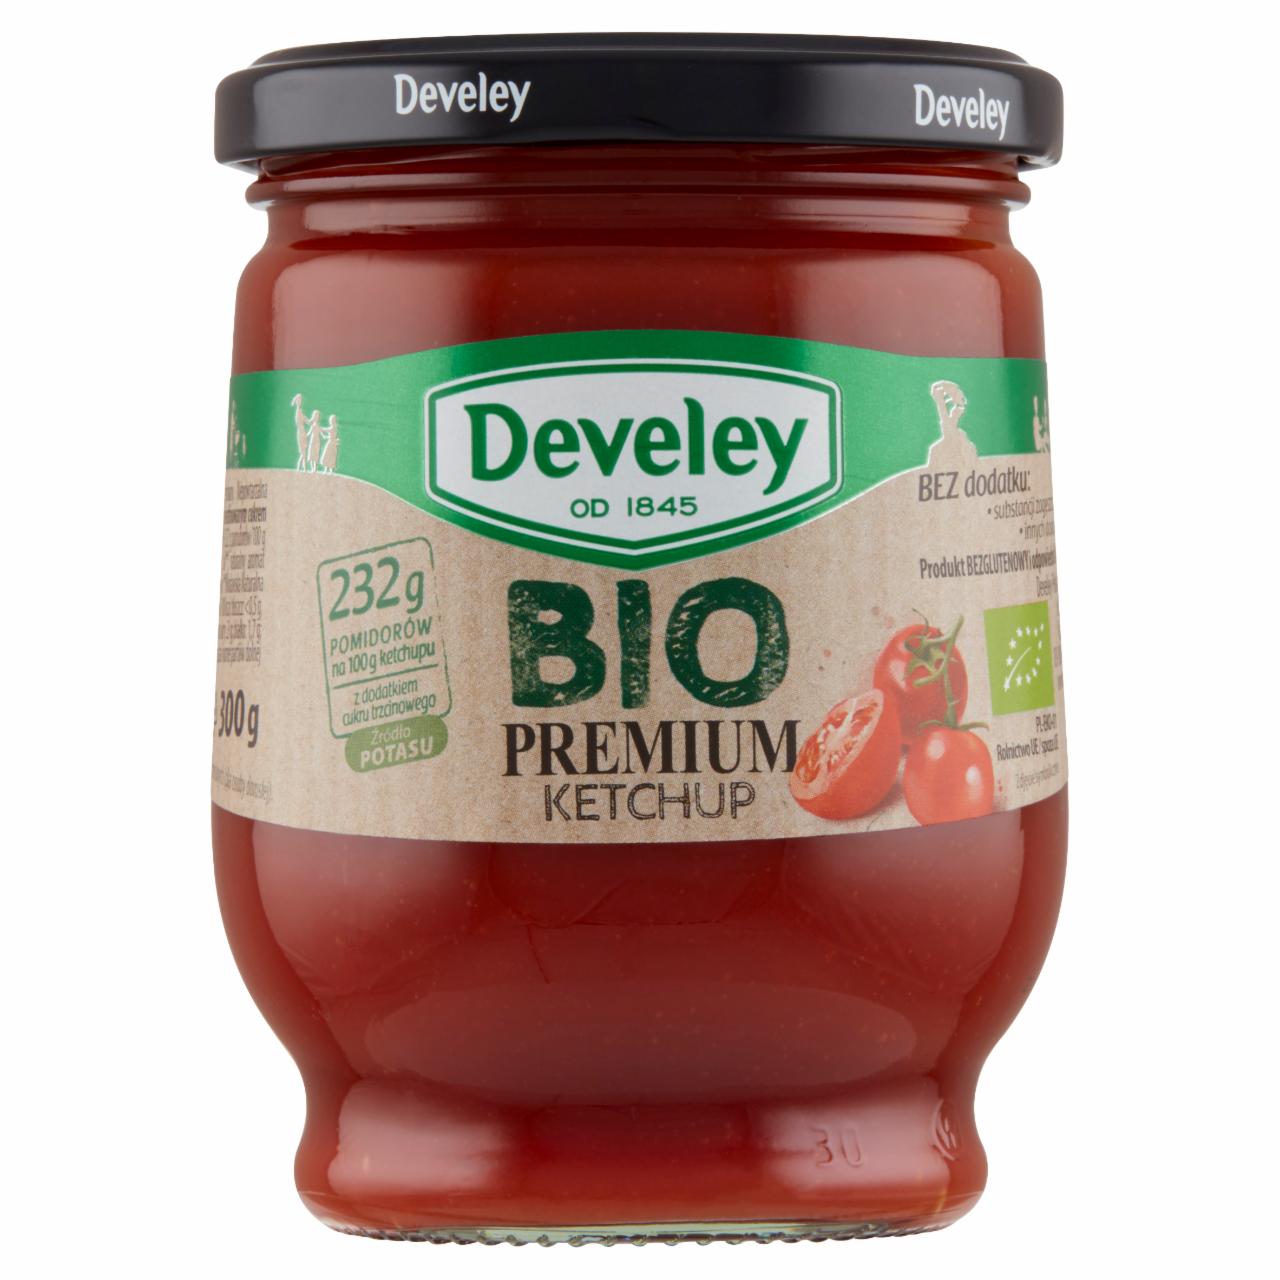 Zdjęcia - Develey Ketchup Premium bio 300 g